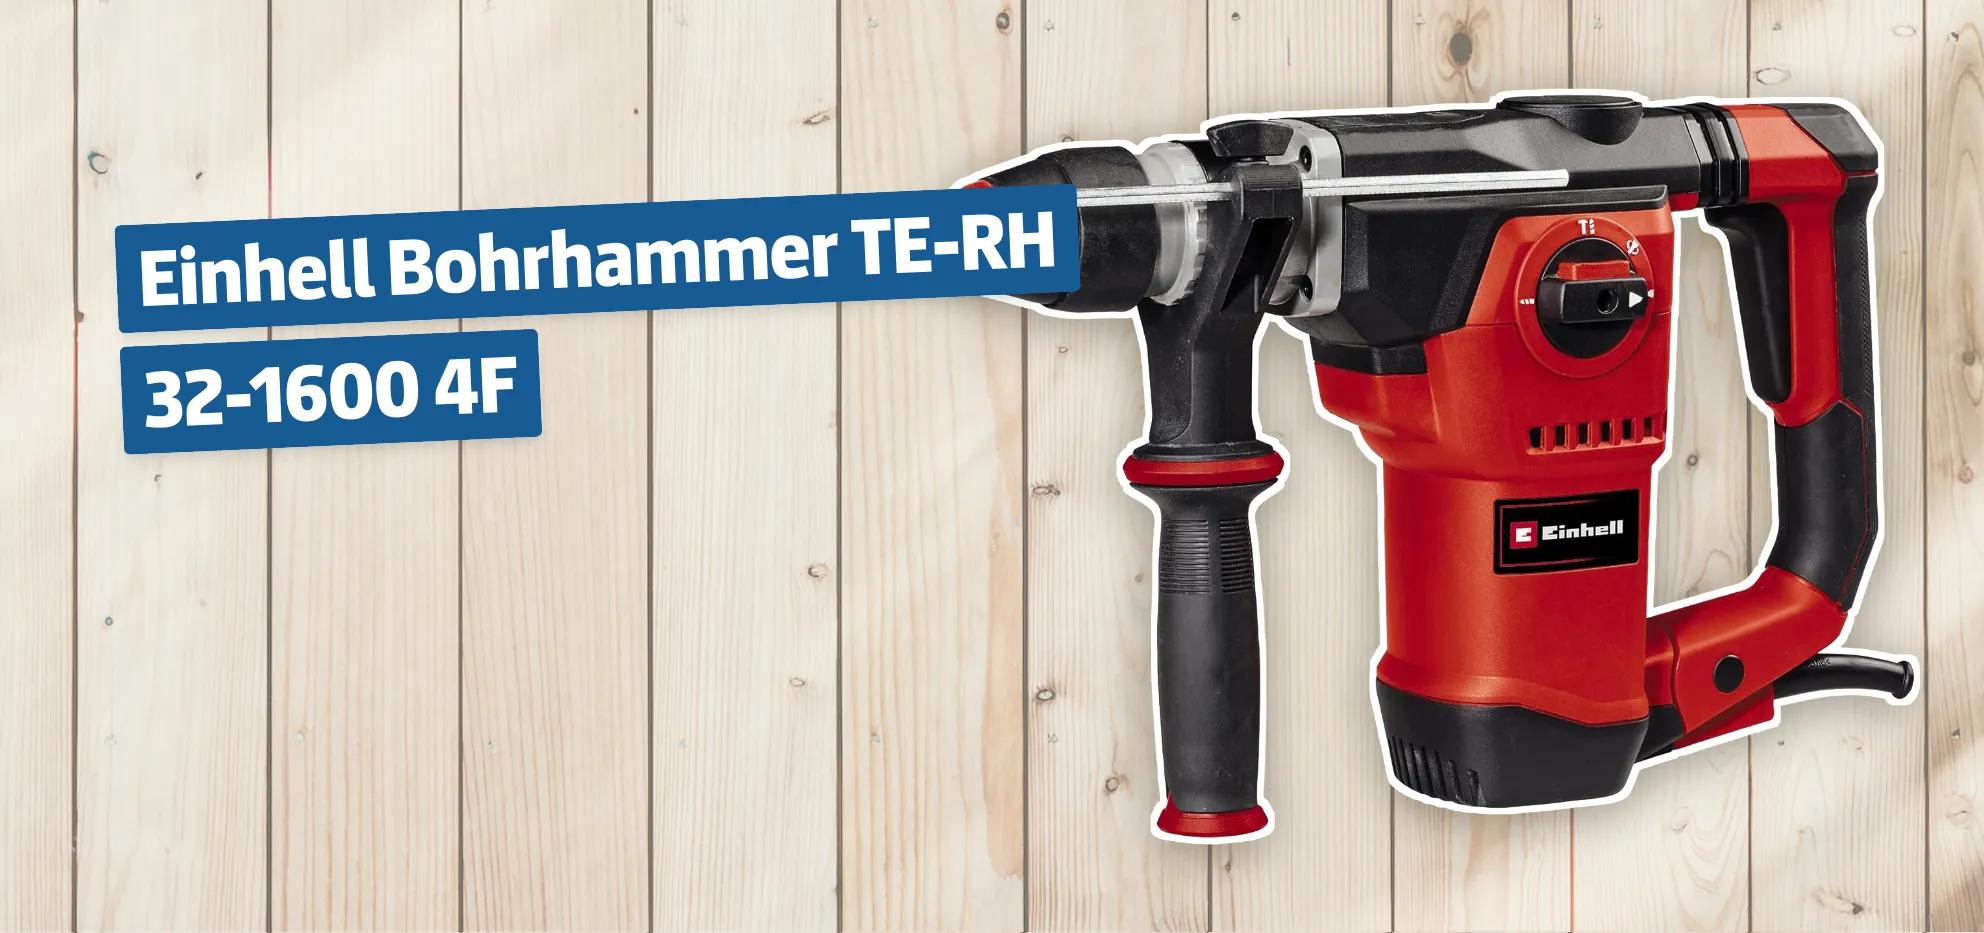 Einhell Bohrhammer TE-RH 32-1600 4F